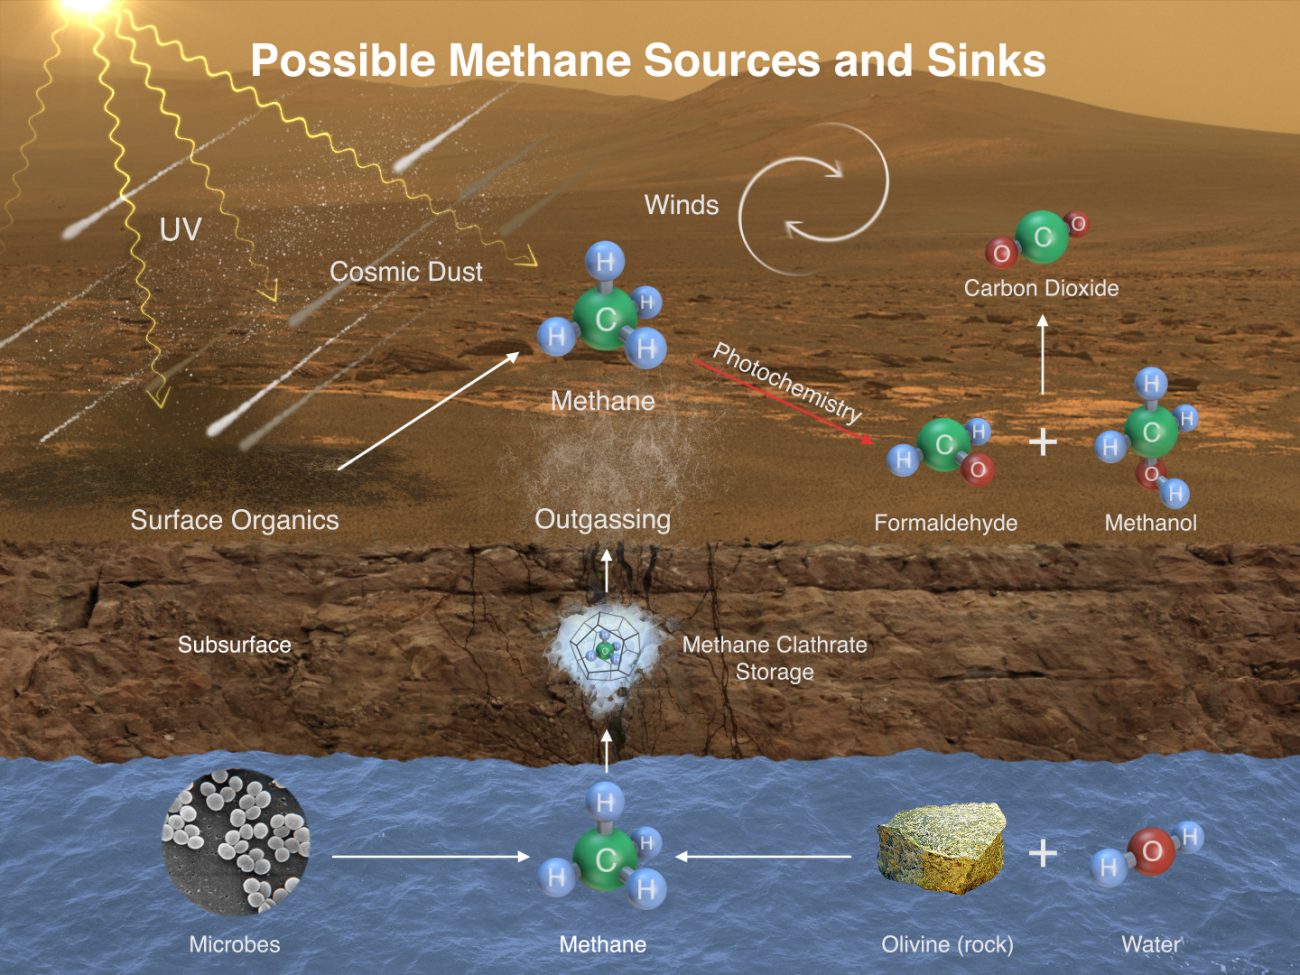 Methane sources on Mars. Image Credit: NASA/JPL-Caltech.